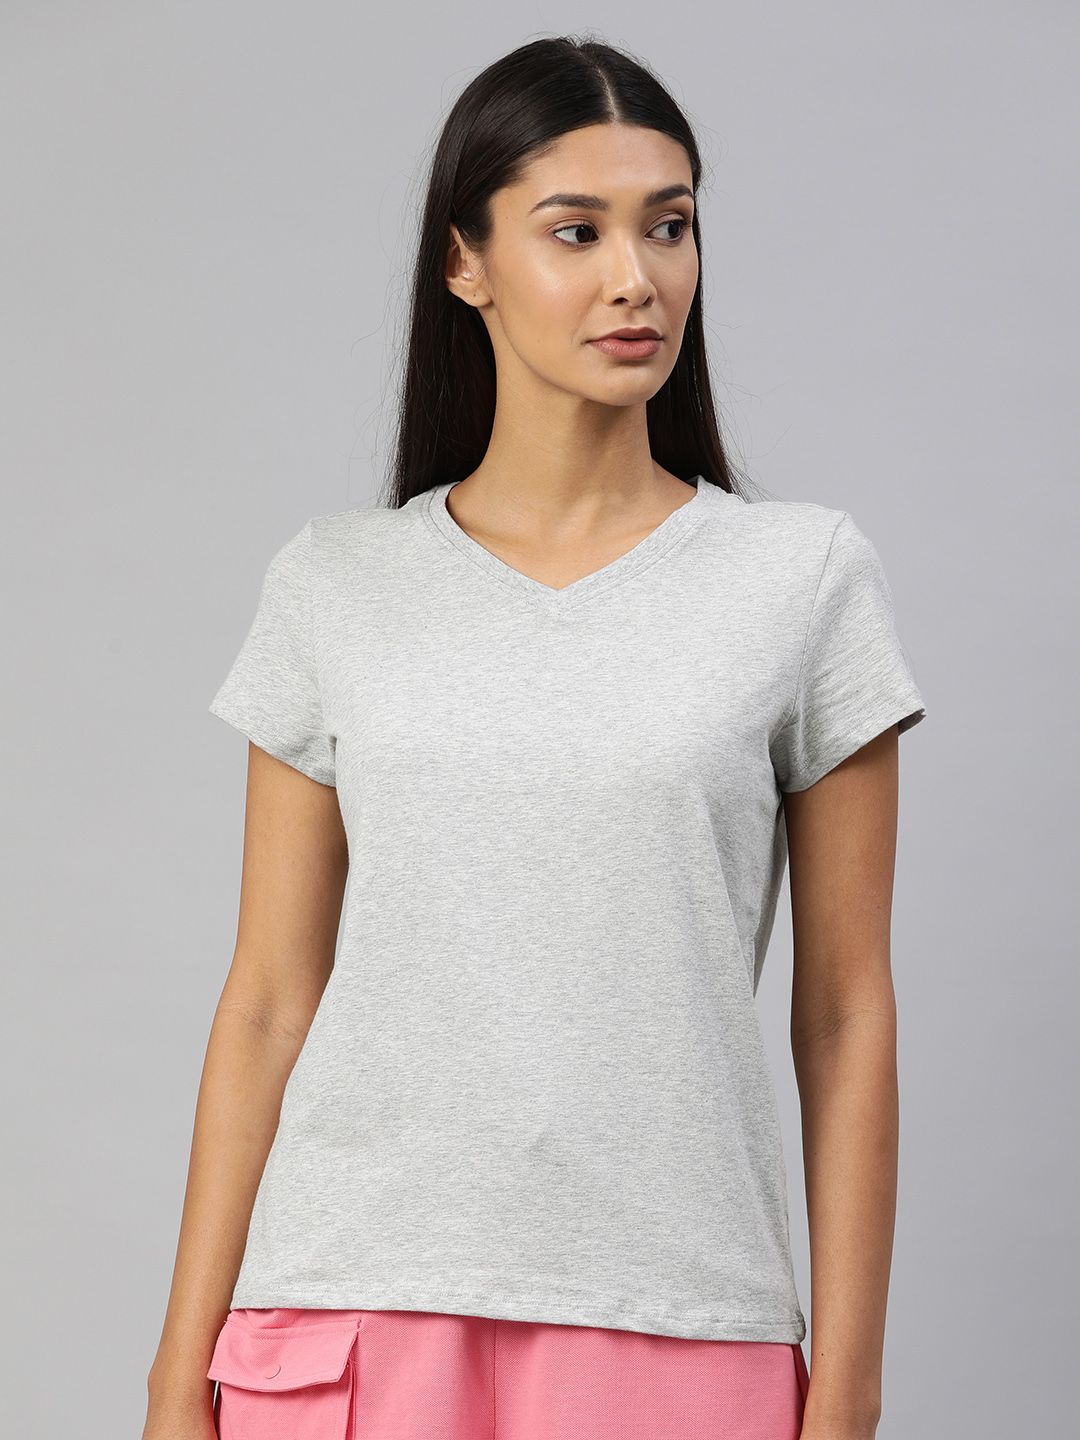 Van Heusen Women Grey Solid V-Neck Lounge T-Shirts Price in India